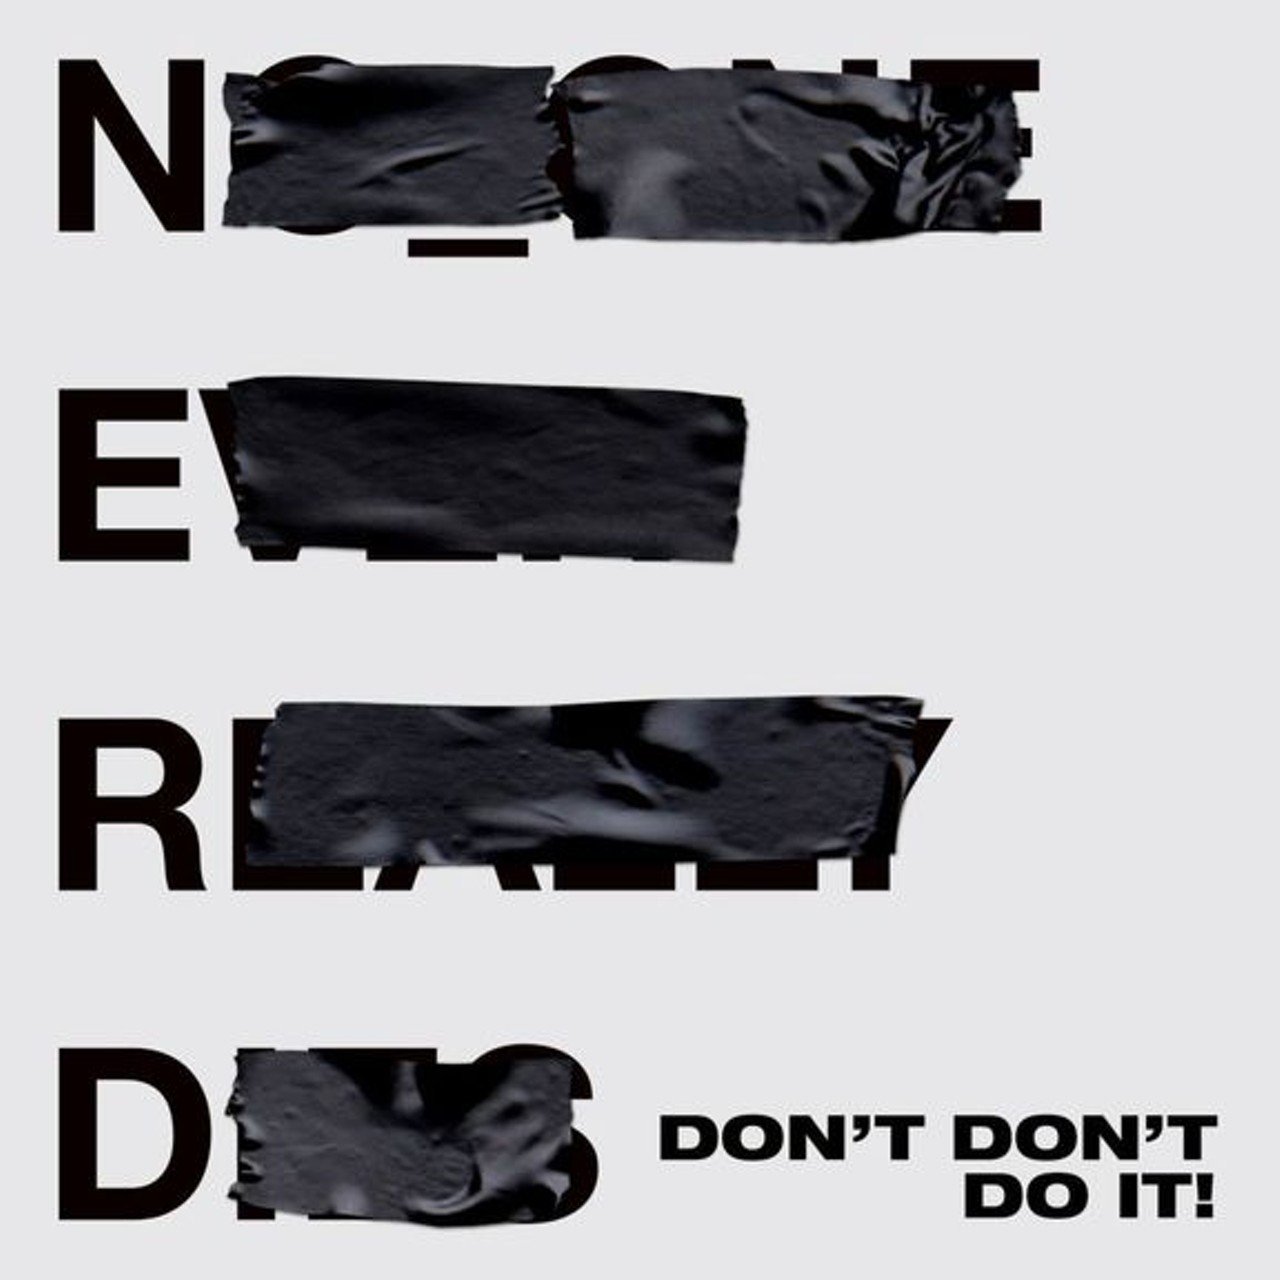 "Don't Don't Do It!" by N.E.R.D feat. Kendrick Lamar 
Montgomery, Baton Rouge, Cincinnati car
Dayton, Ohio